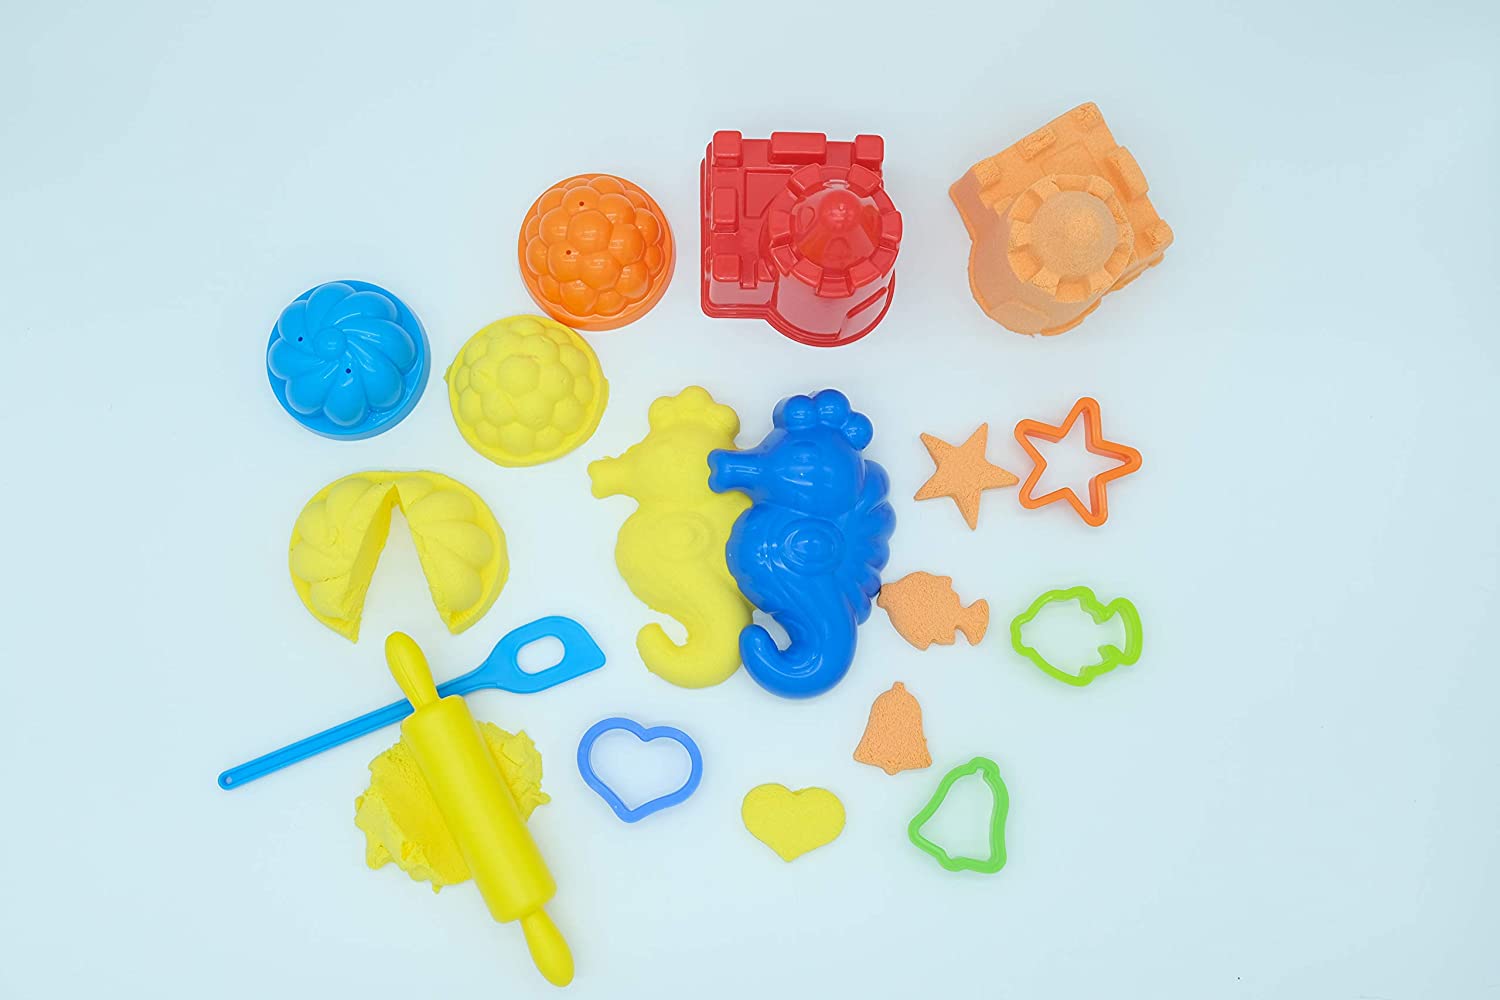 Play Dough Accessories For Kids, 27Pcs PlayDough Tools Sets, Molds